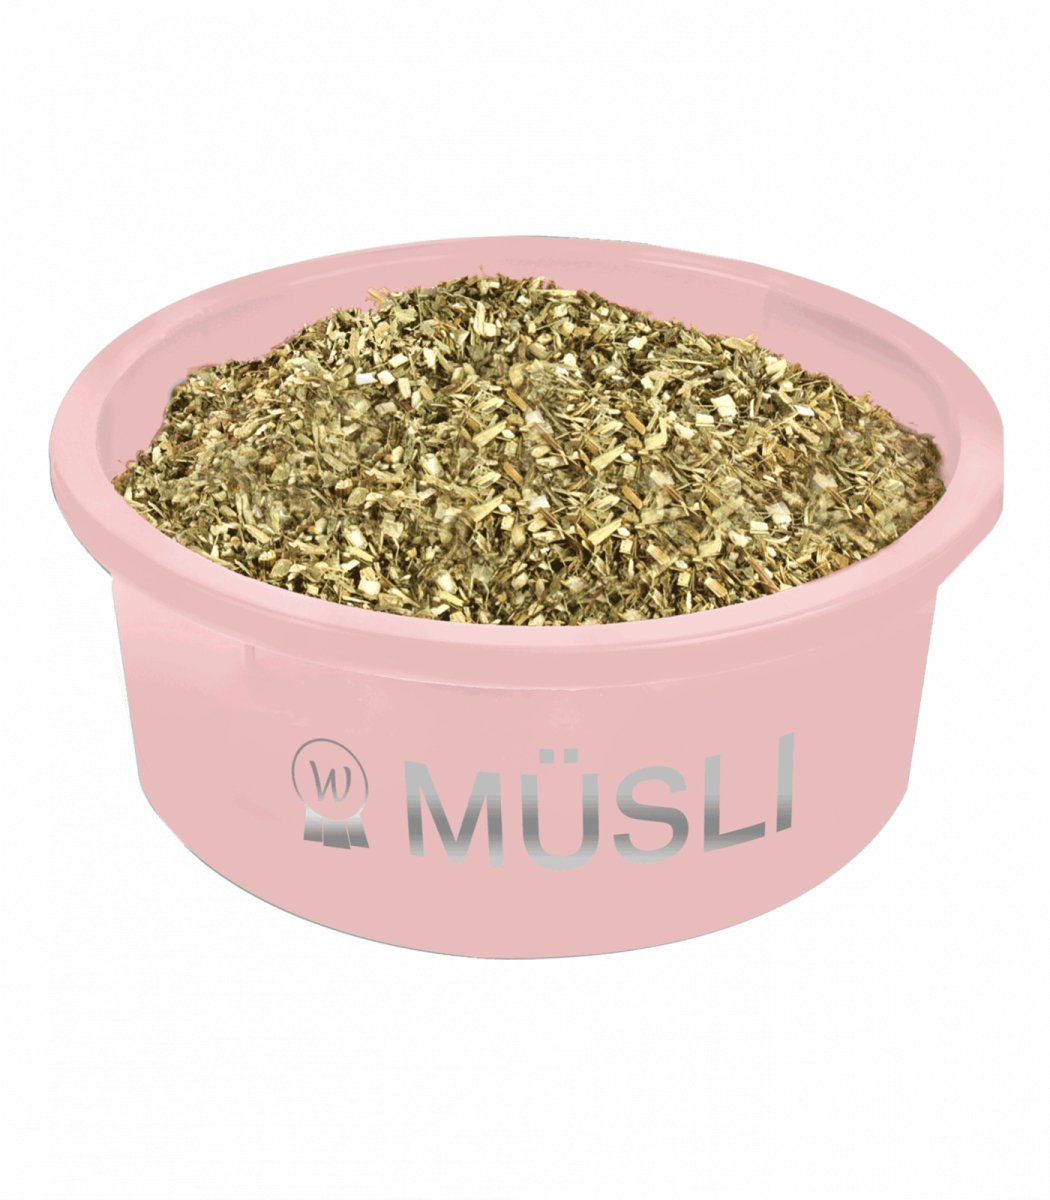 Muesli Bowl, linnea pink, 5 L - animondo.dk